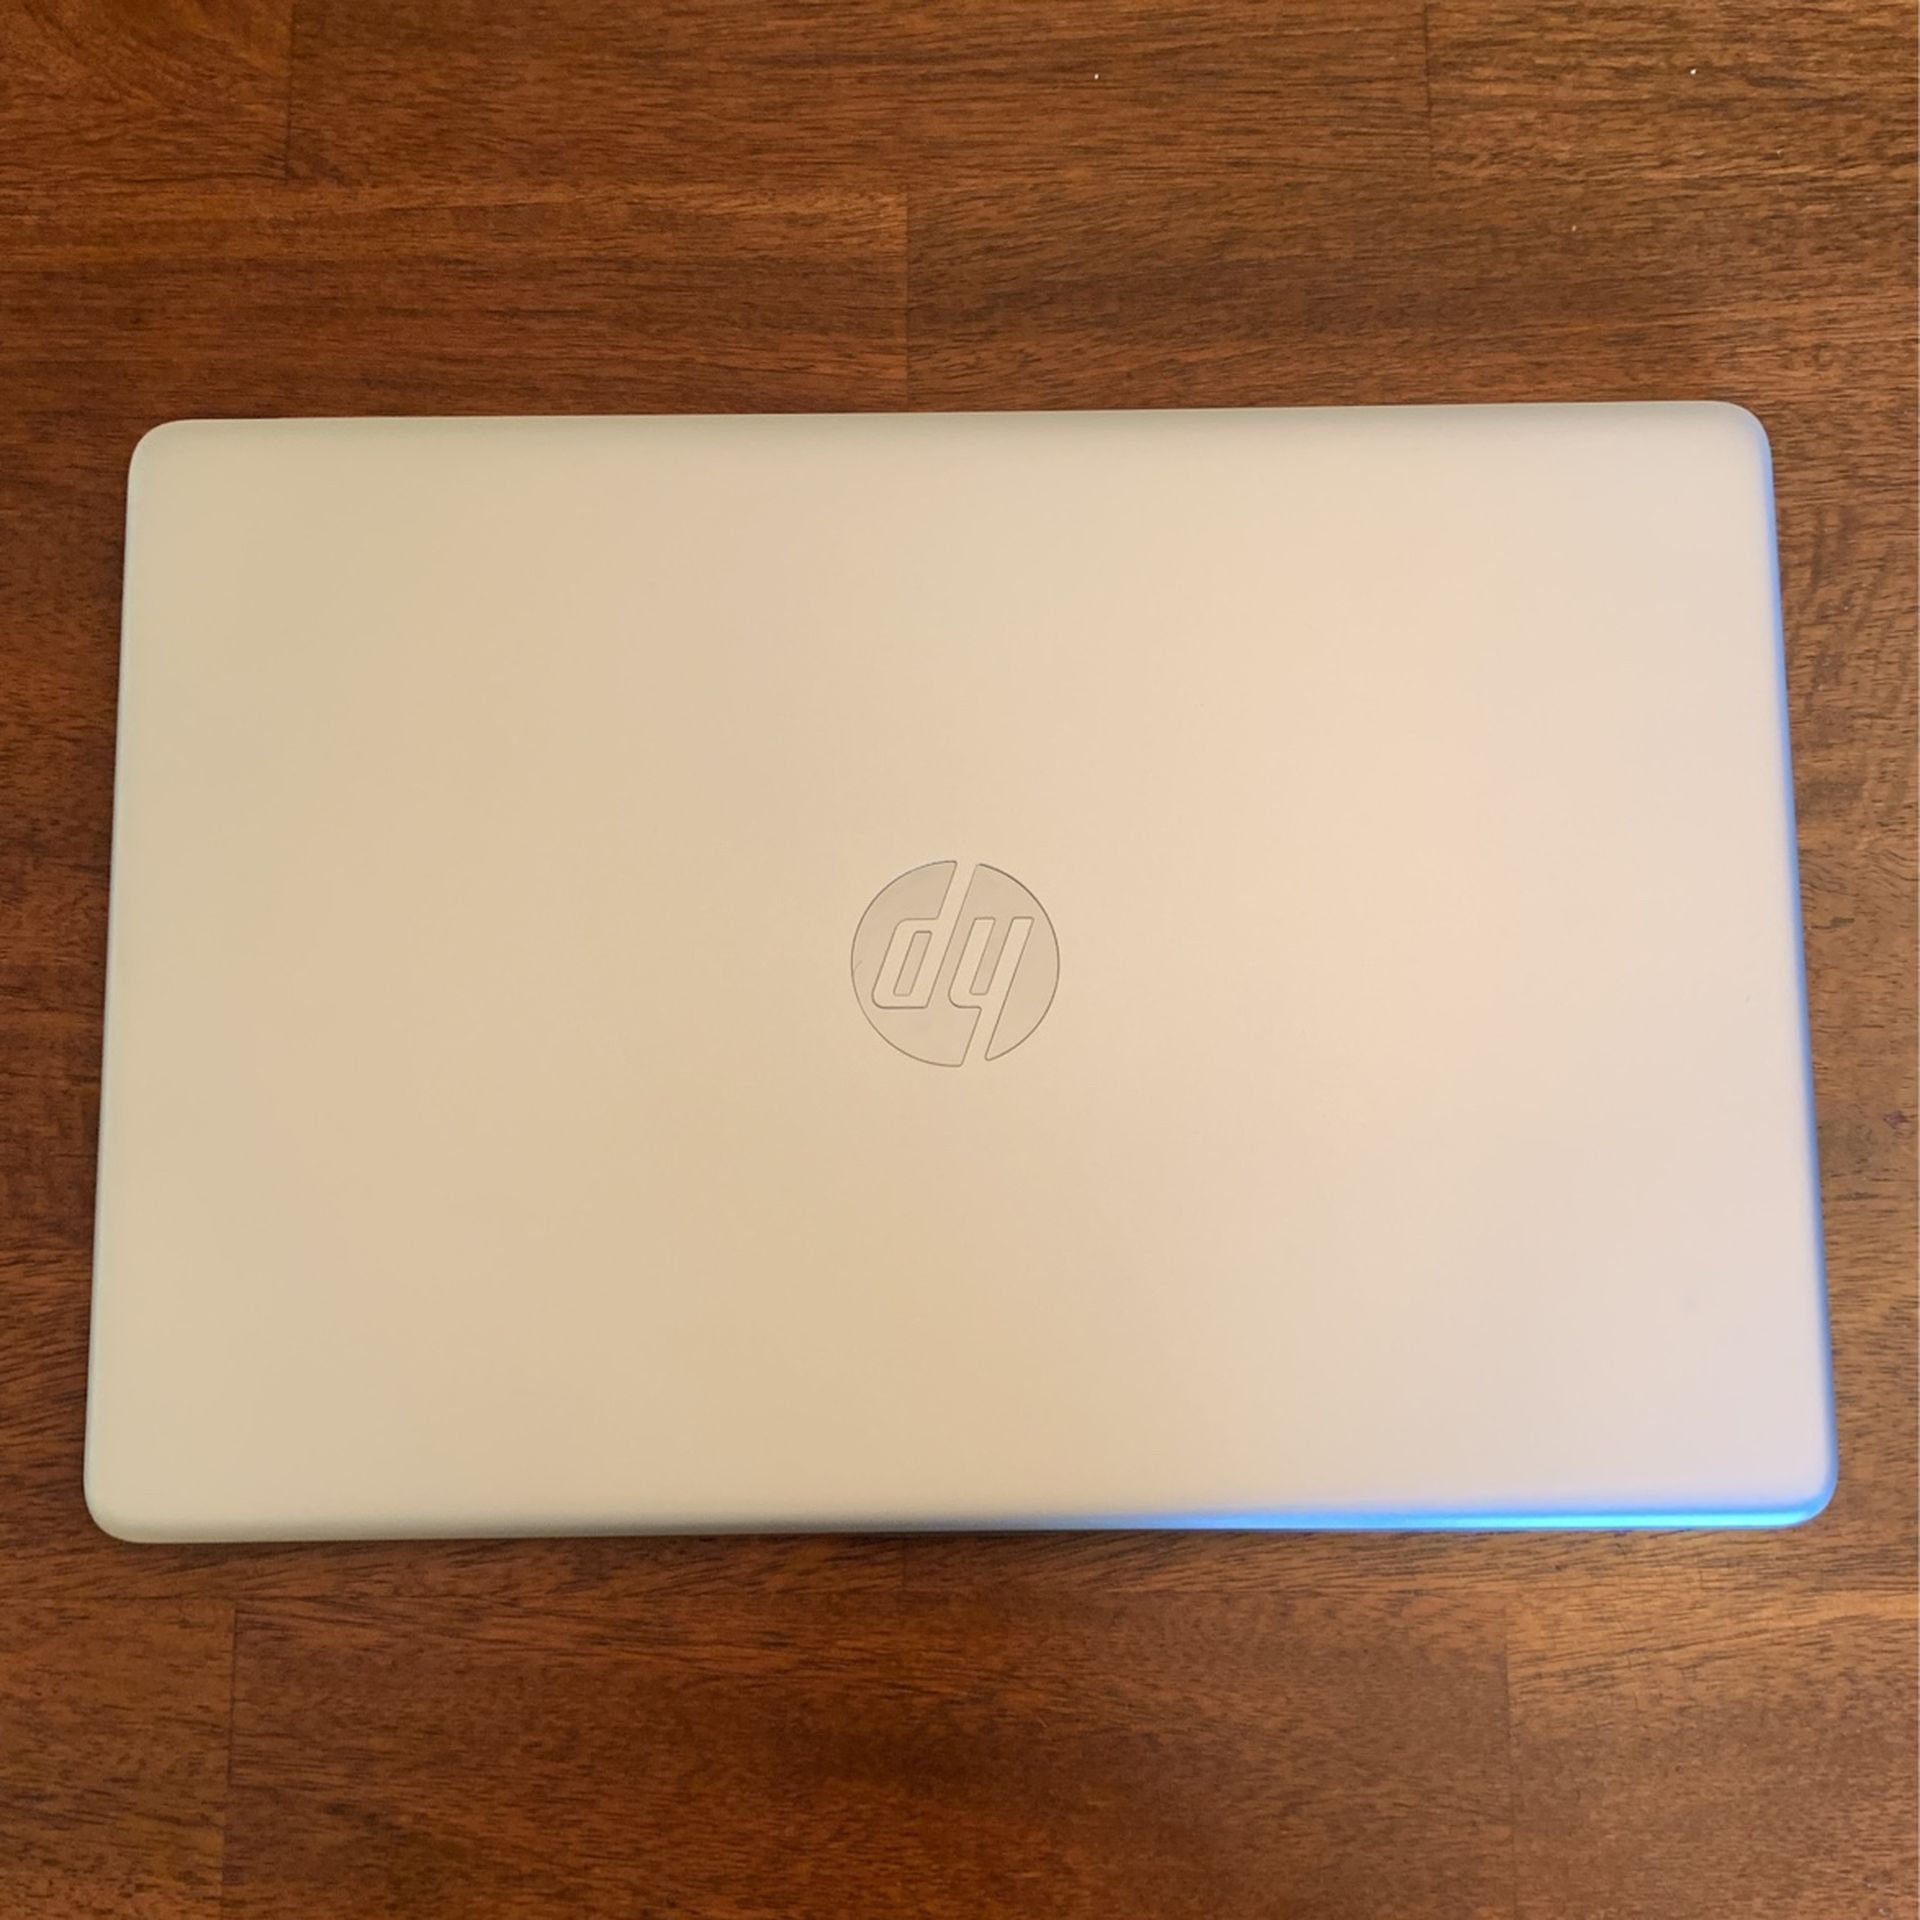 HP Laptop Intel Core i5